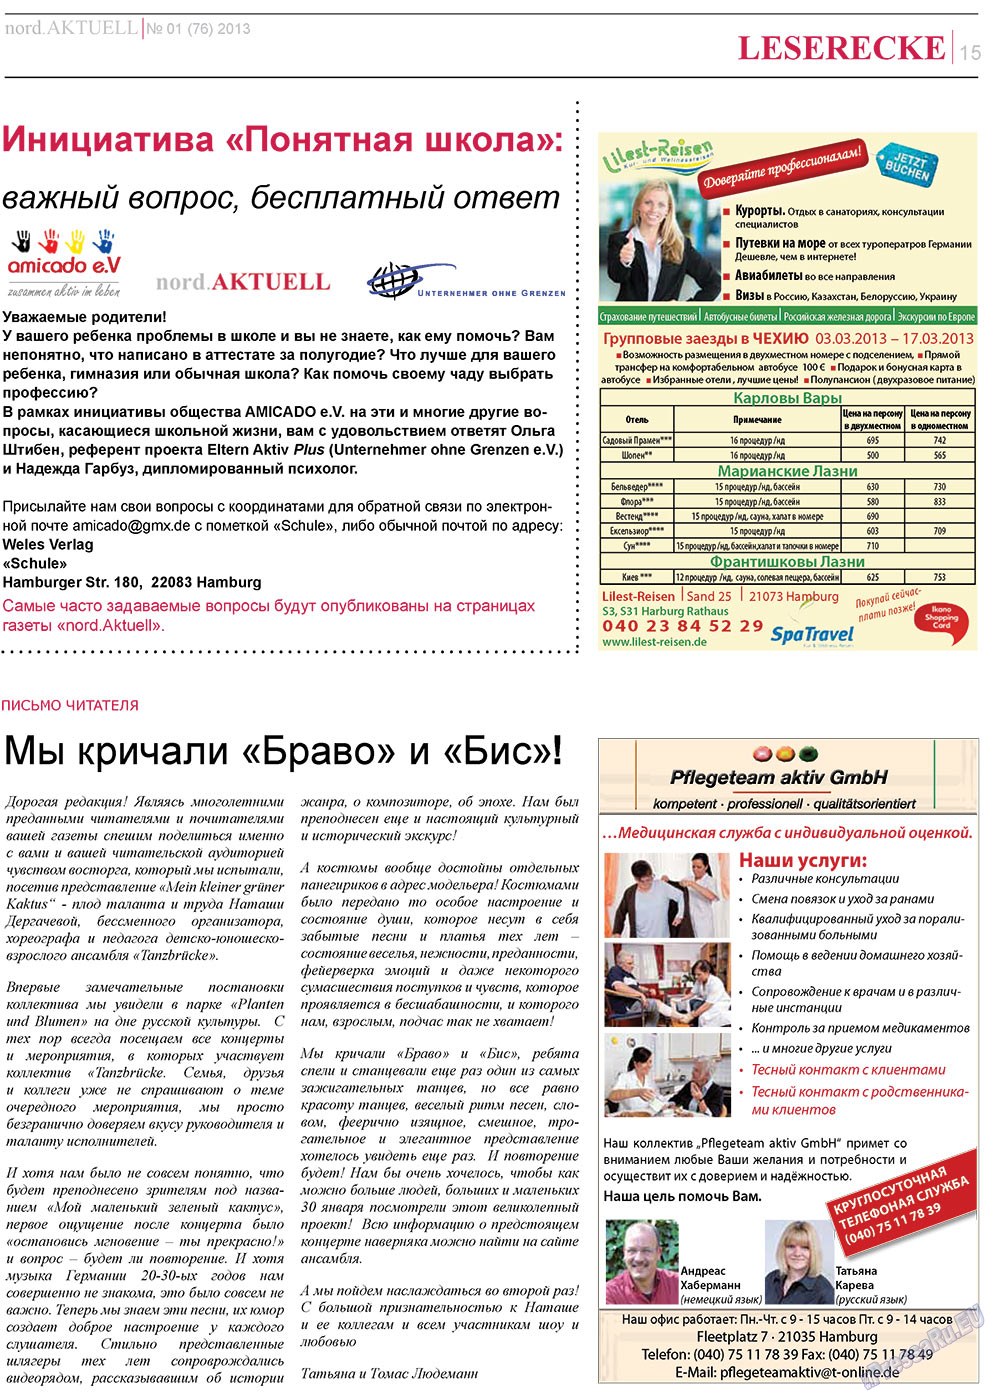 nord.Aktuell, газета. 2013 №1 стр.15